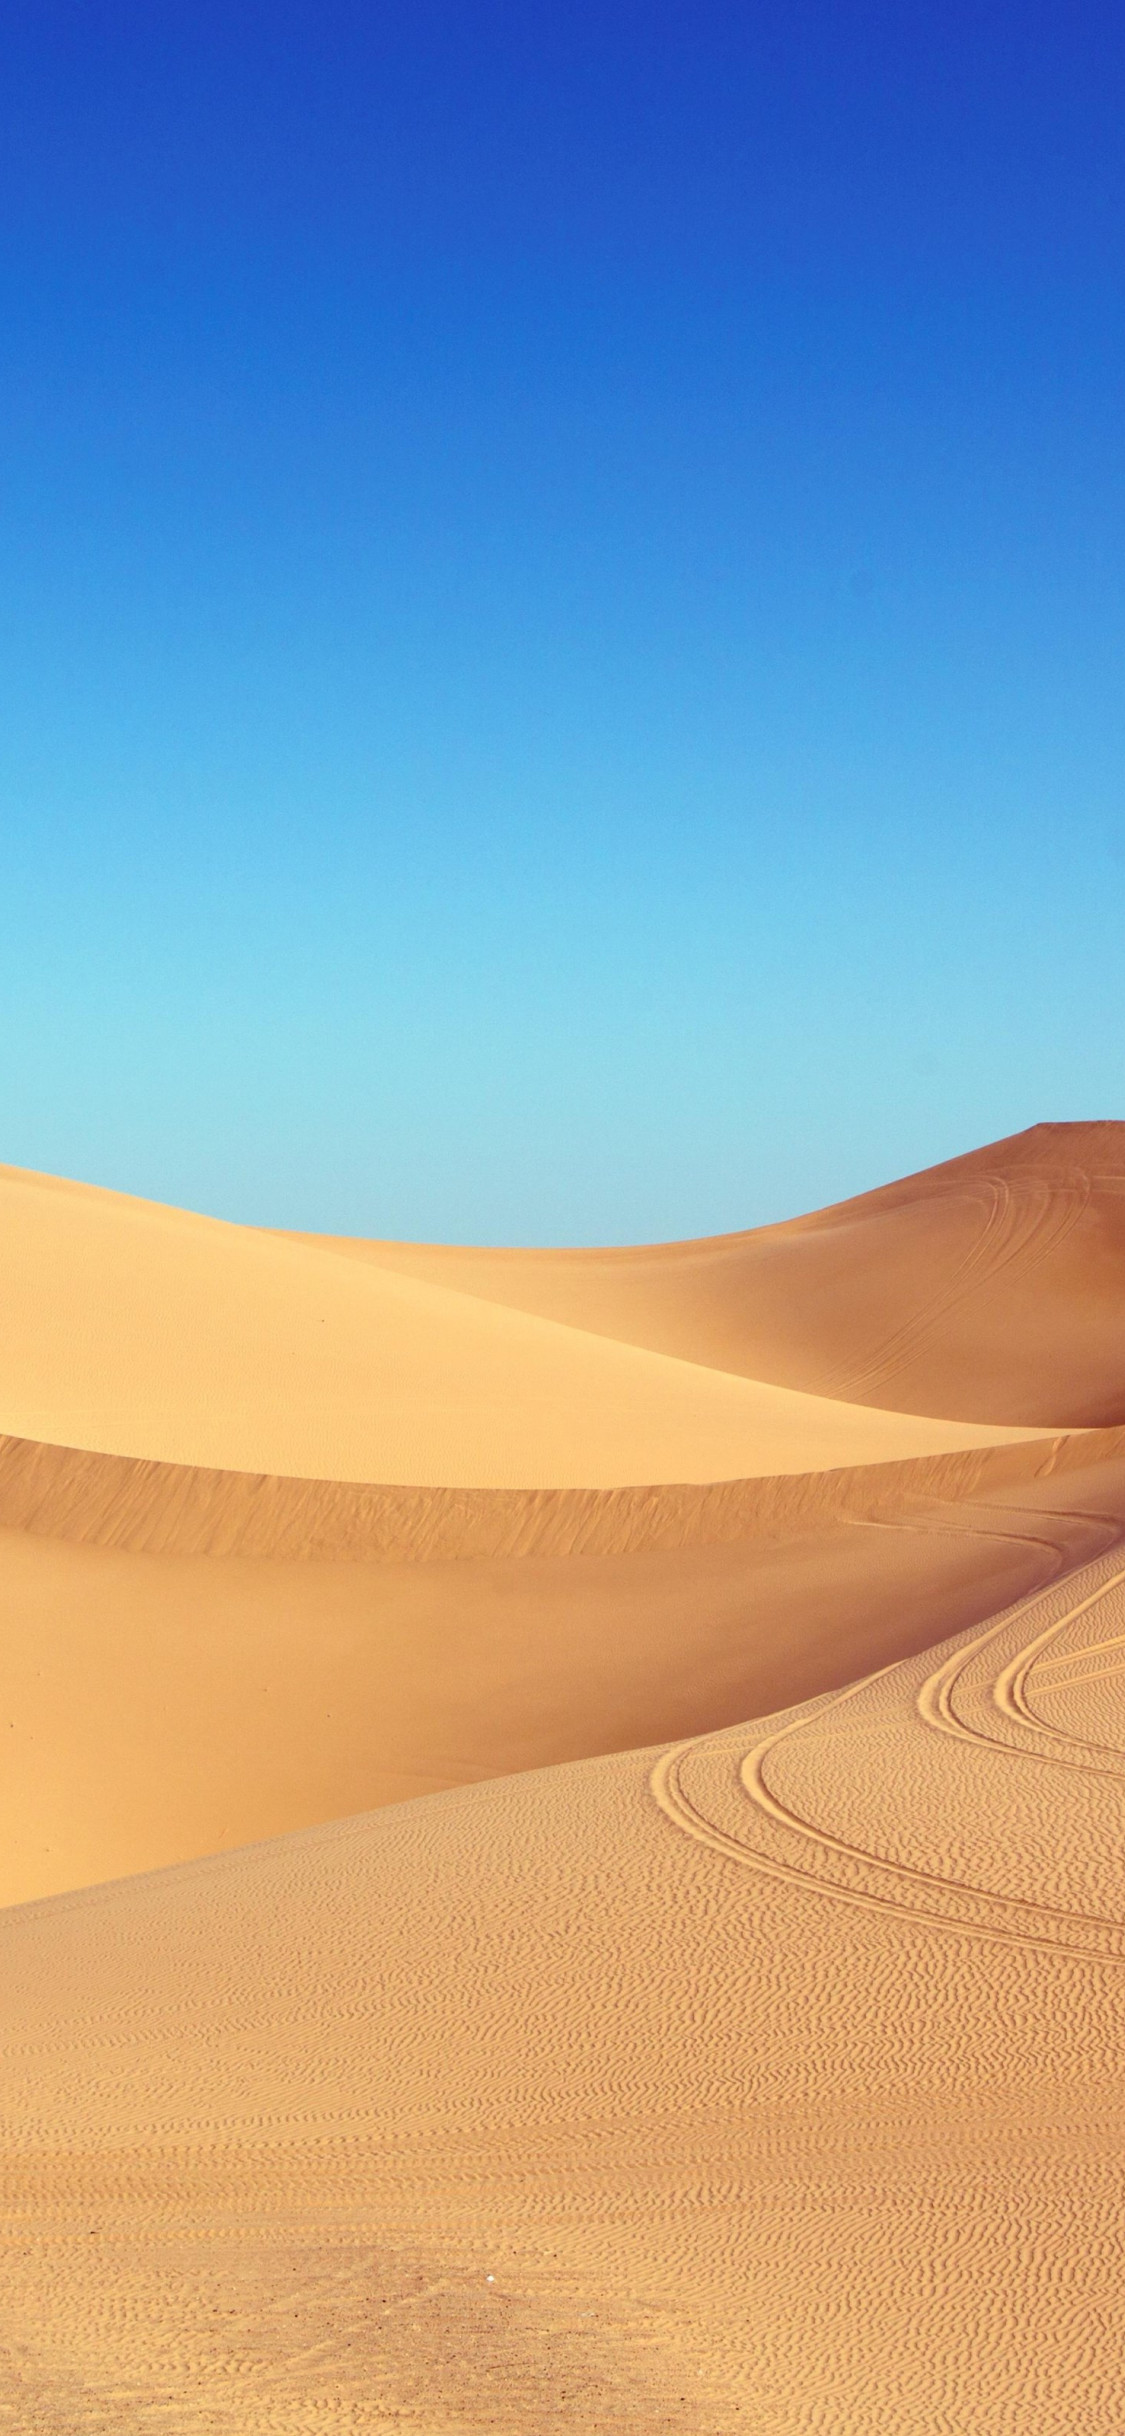 Blue sky and desert dunes wallpaper 1125x2436